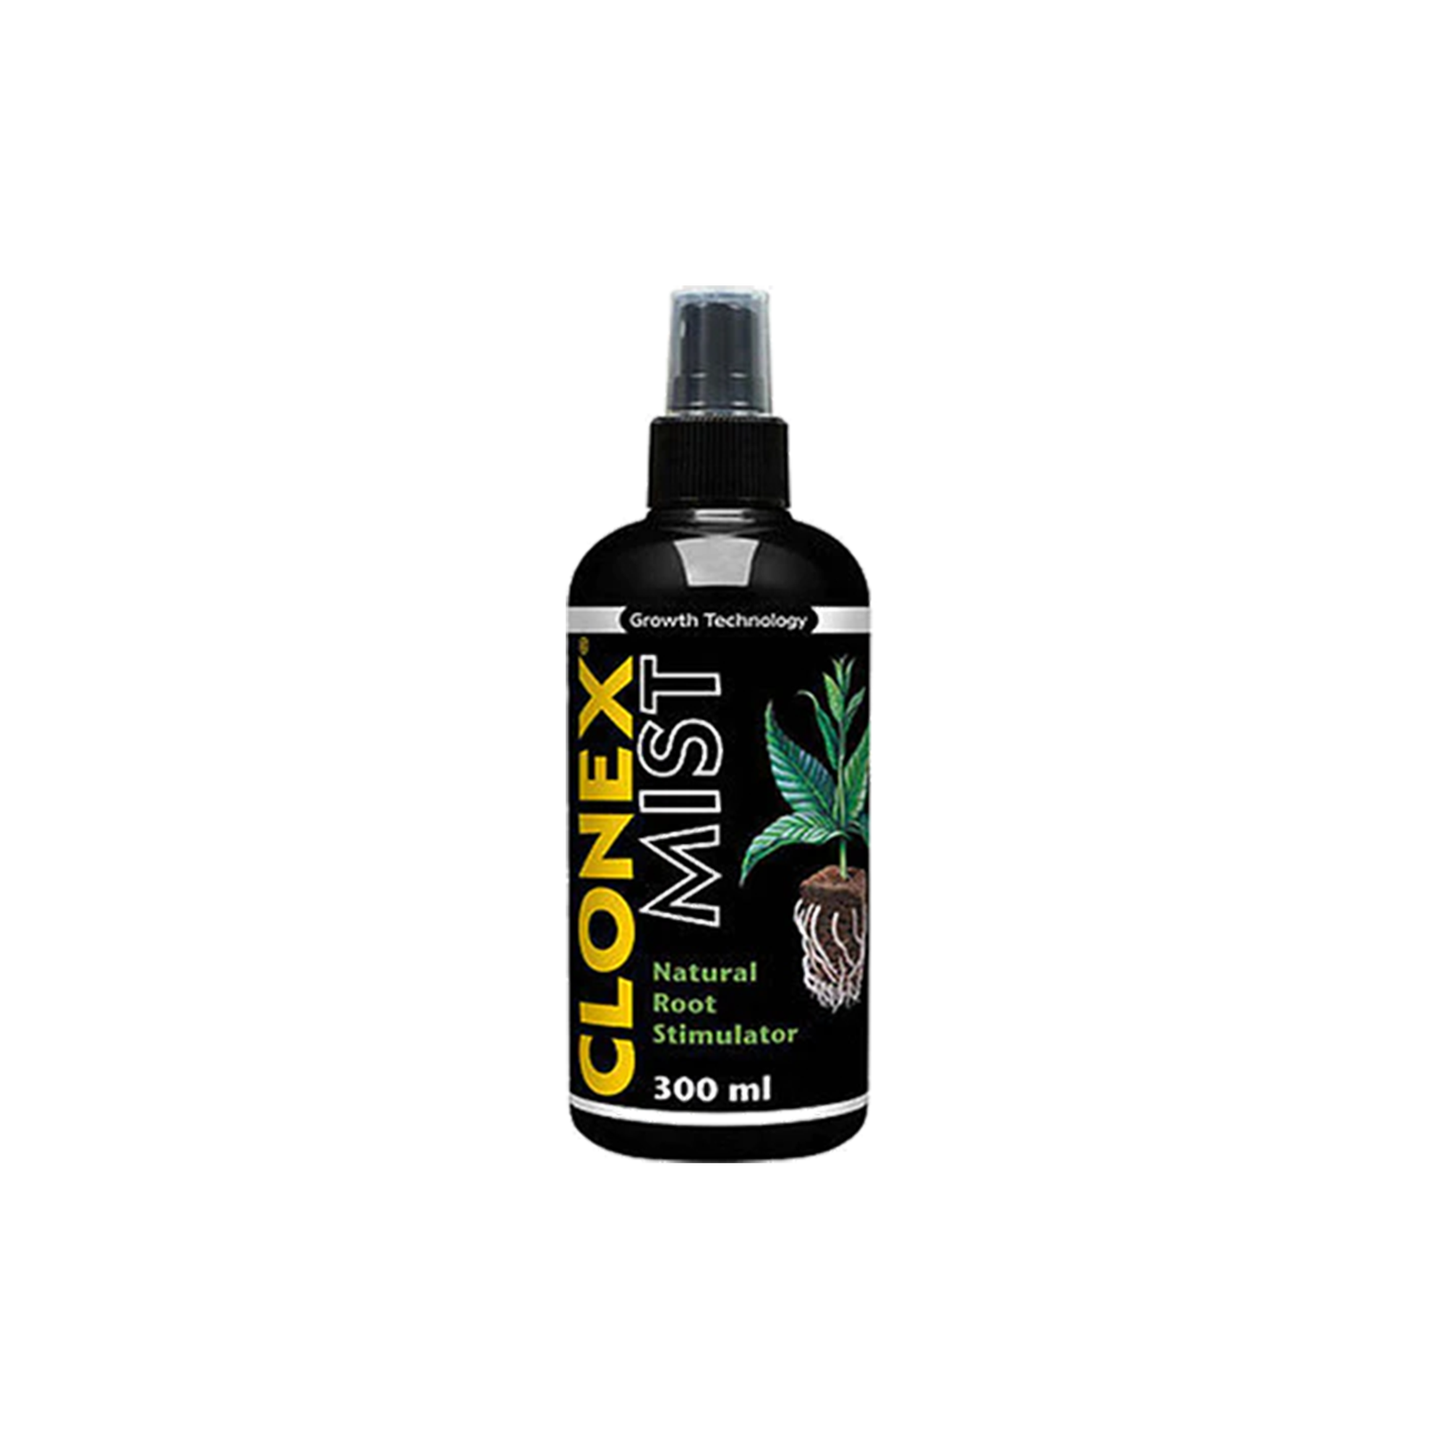 Growth Technology - Clonex Mist (Spray)